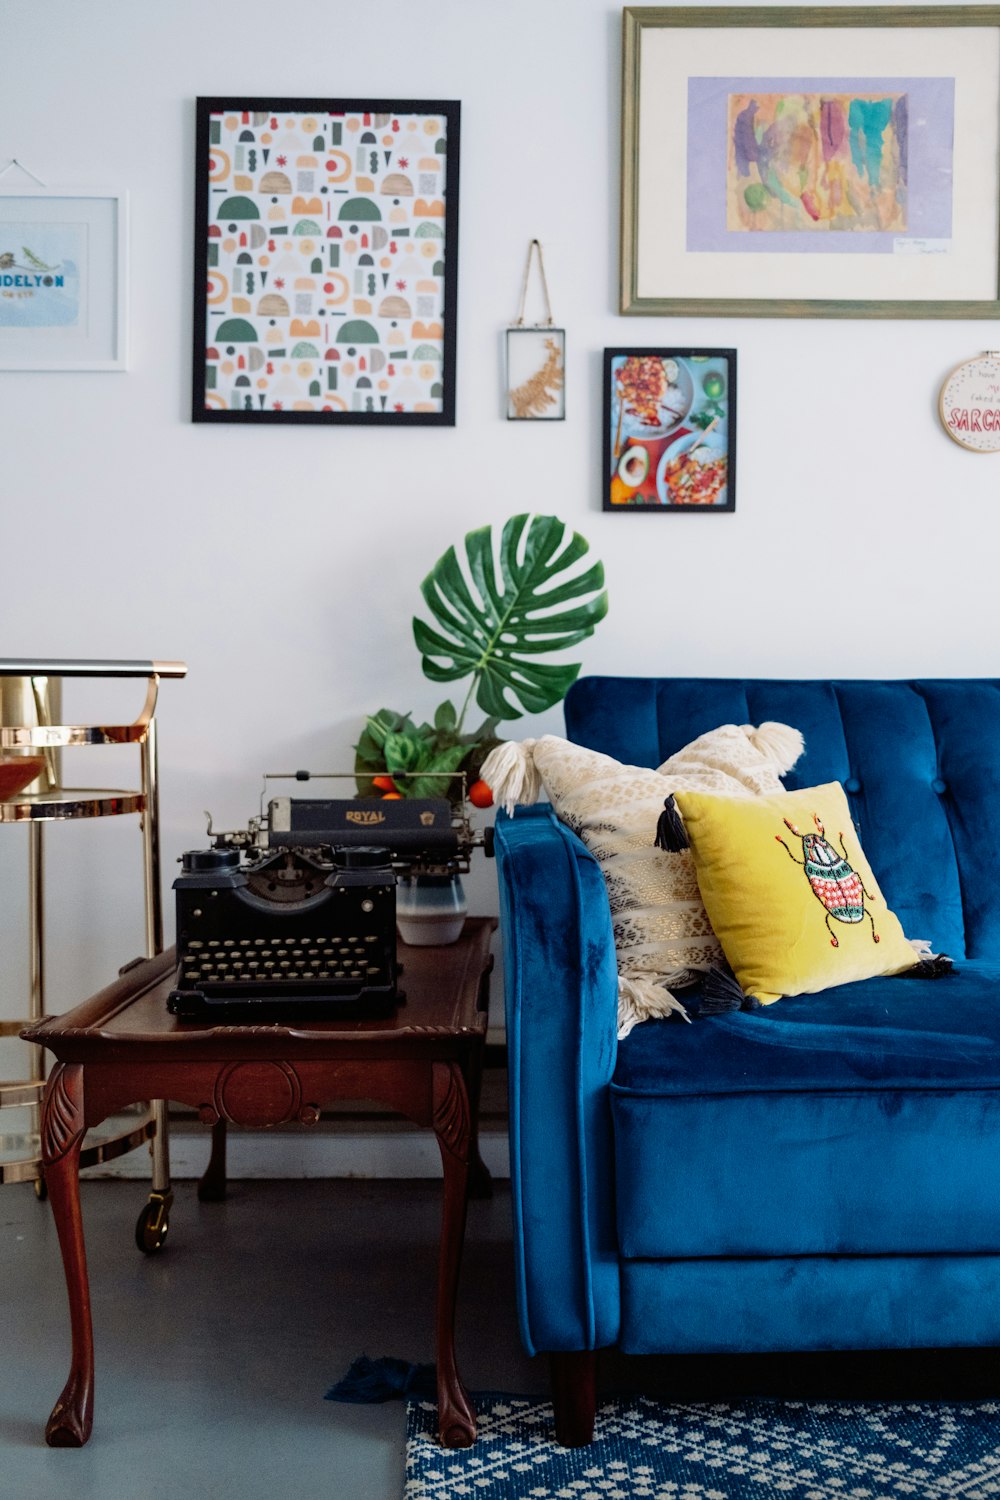 Blue sofa with throw pillows photo – Free Interior Image on Unsplash